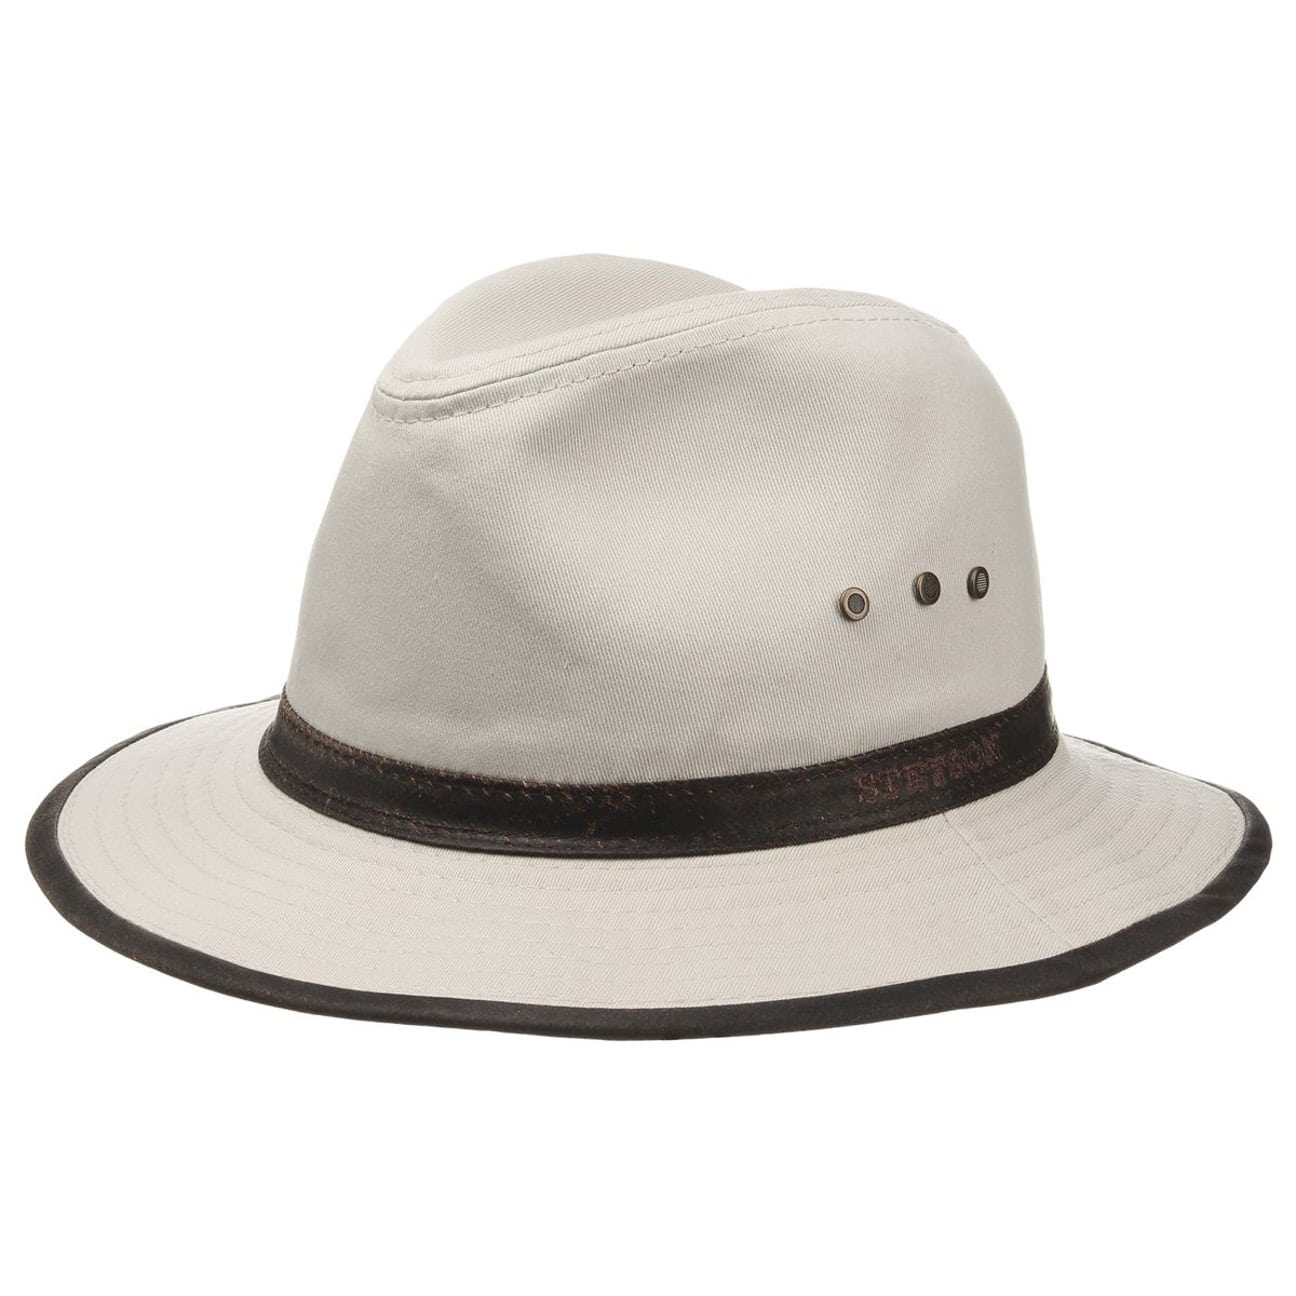 Stetson - Ava Cotton Outdoor Hat - White